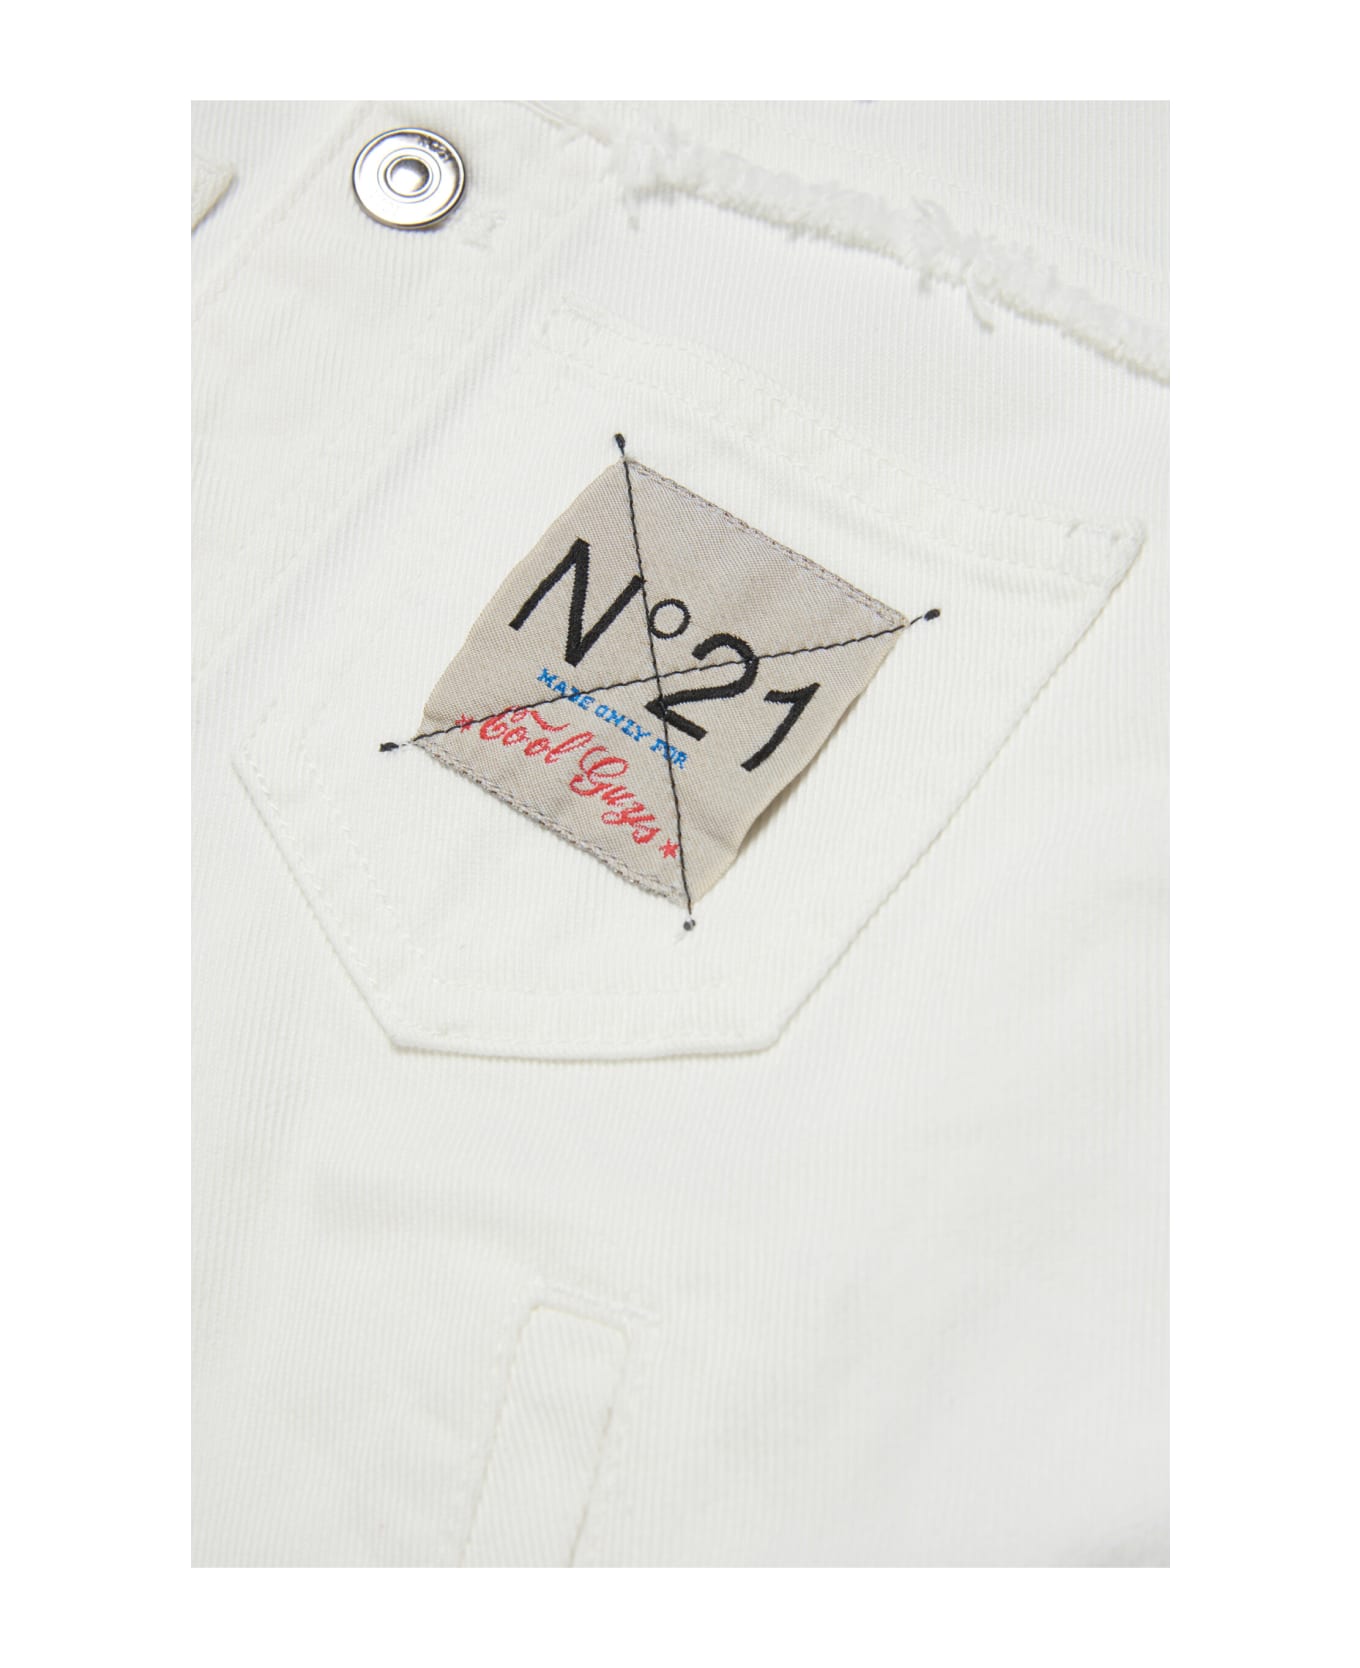 N.21 N21j70u Jacket N°21 Natural White Denim Jacket With Logo On The Back - Natural white